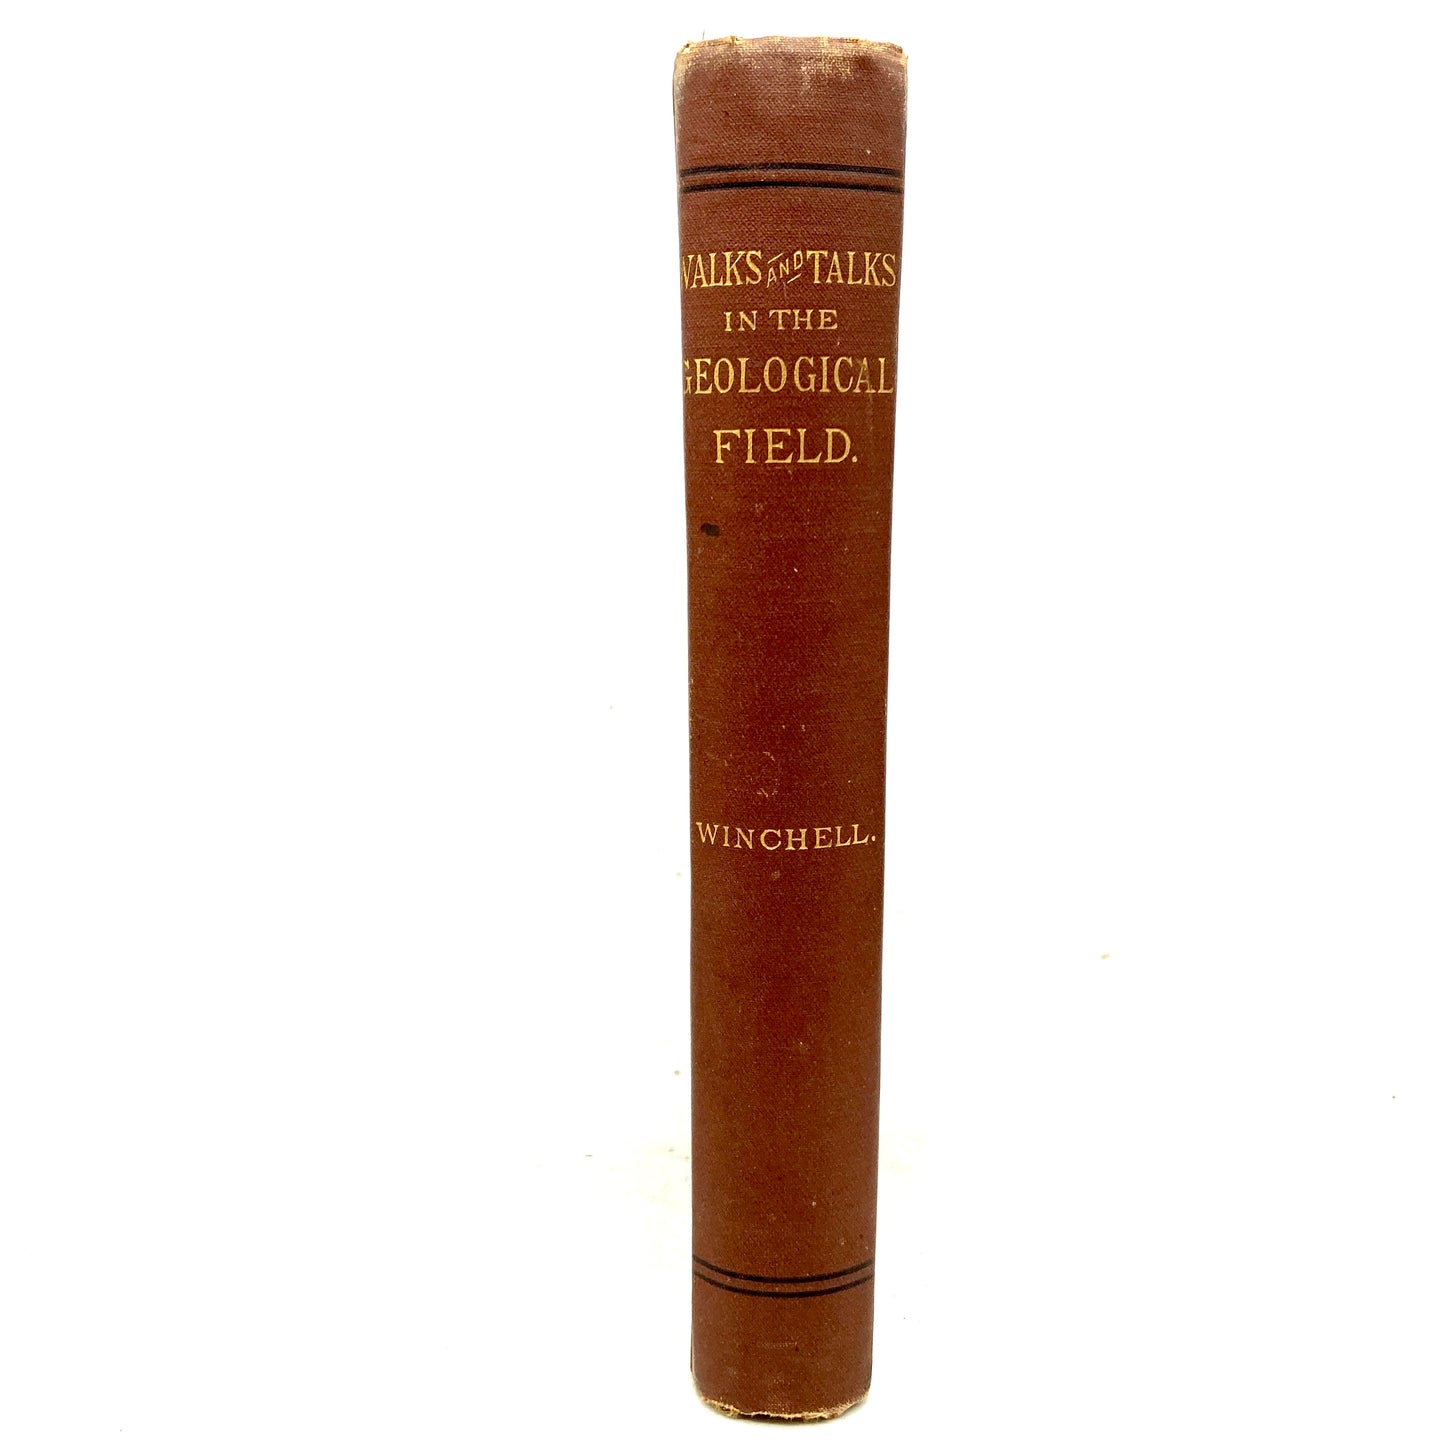 WINCHELL, Alexander "Walks and Talks in the Geological Field" [Chautauqua Press, 1886] - Buzz Bookstore